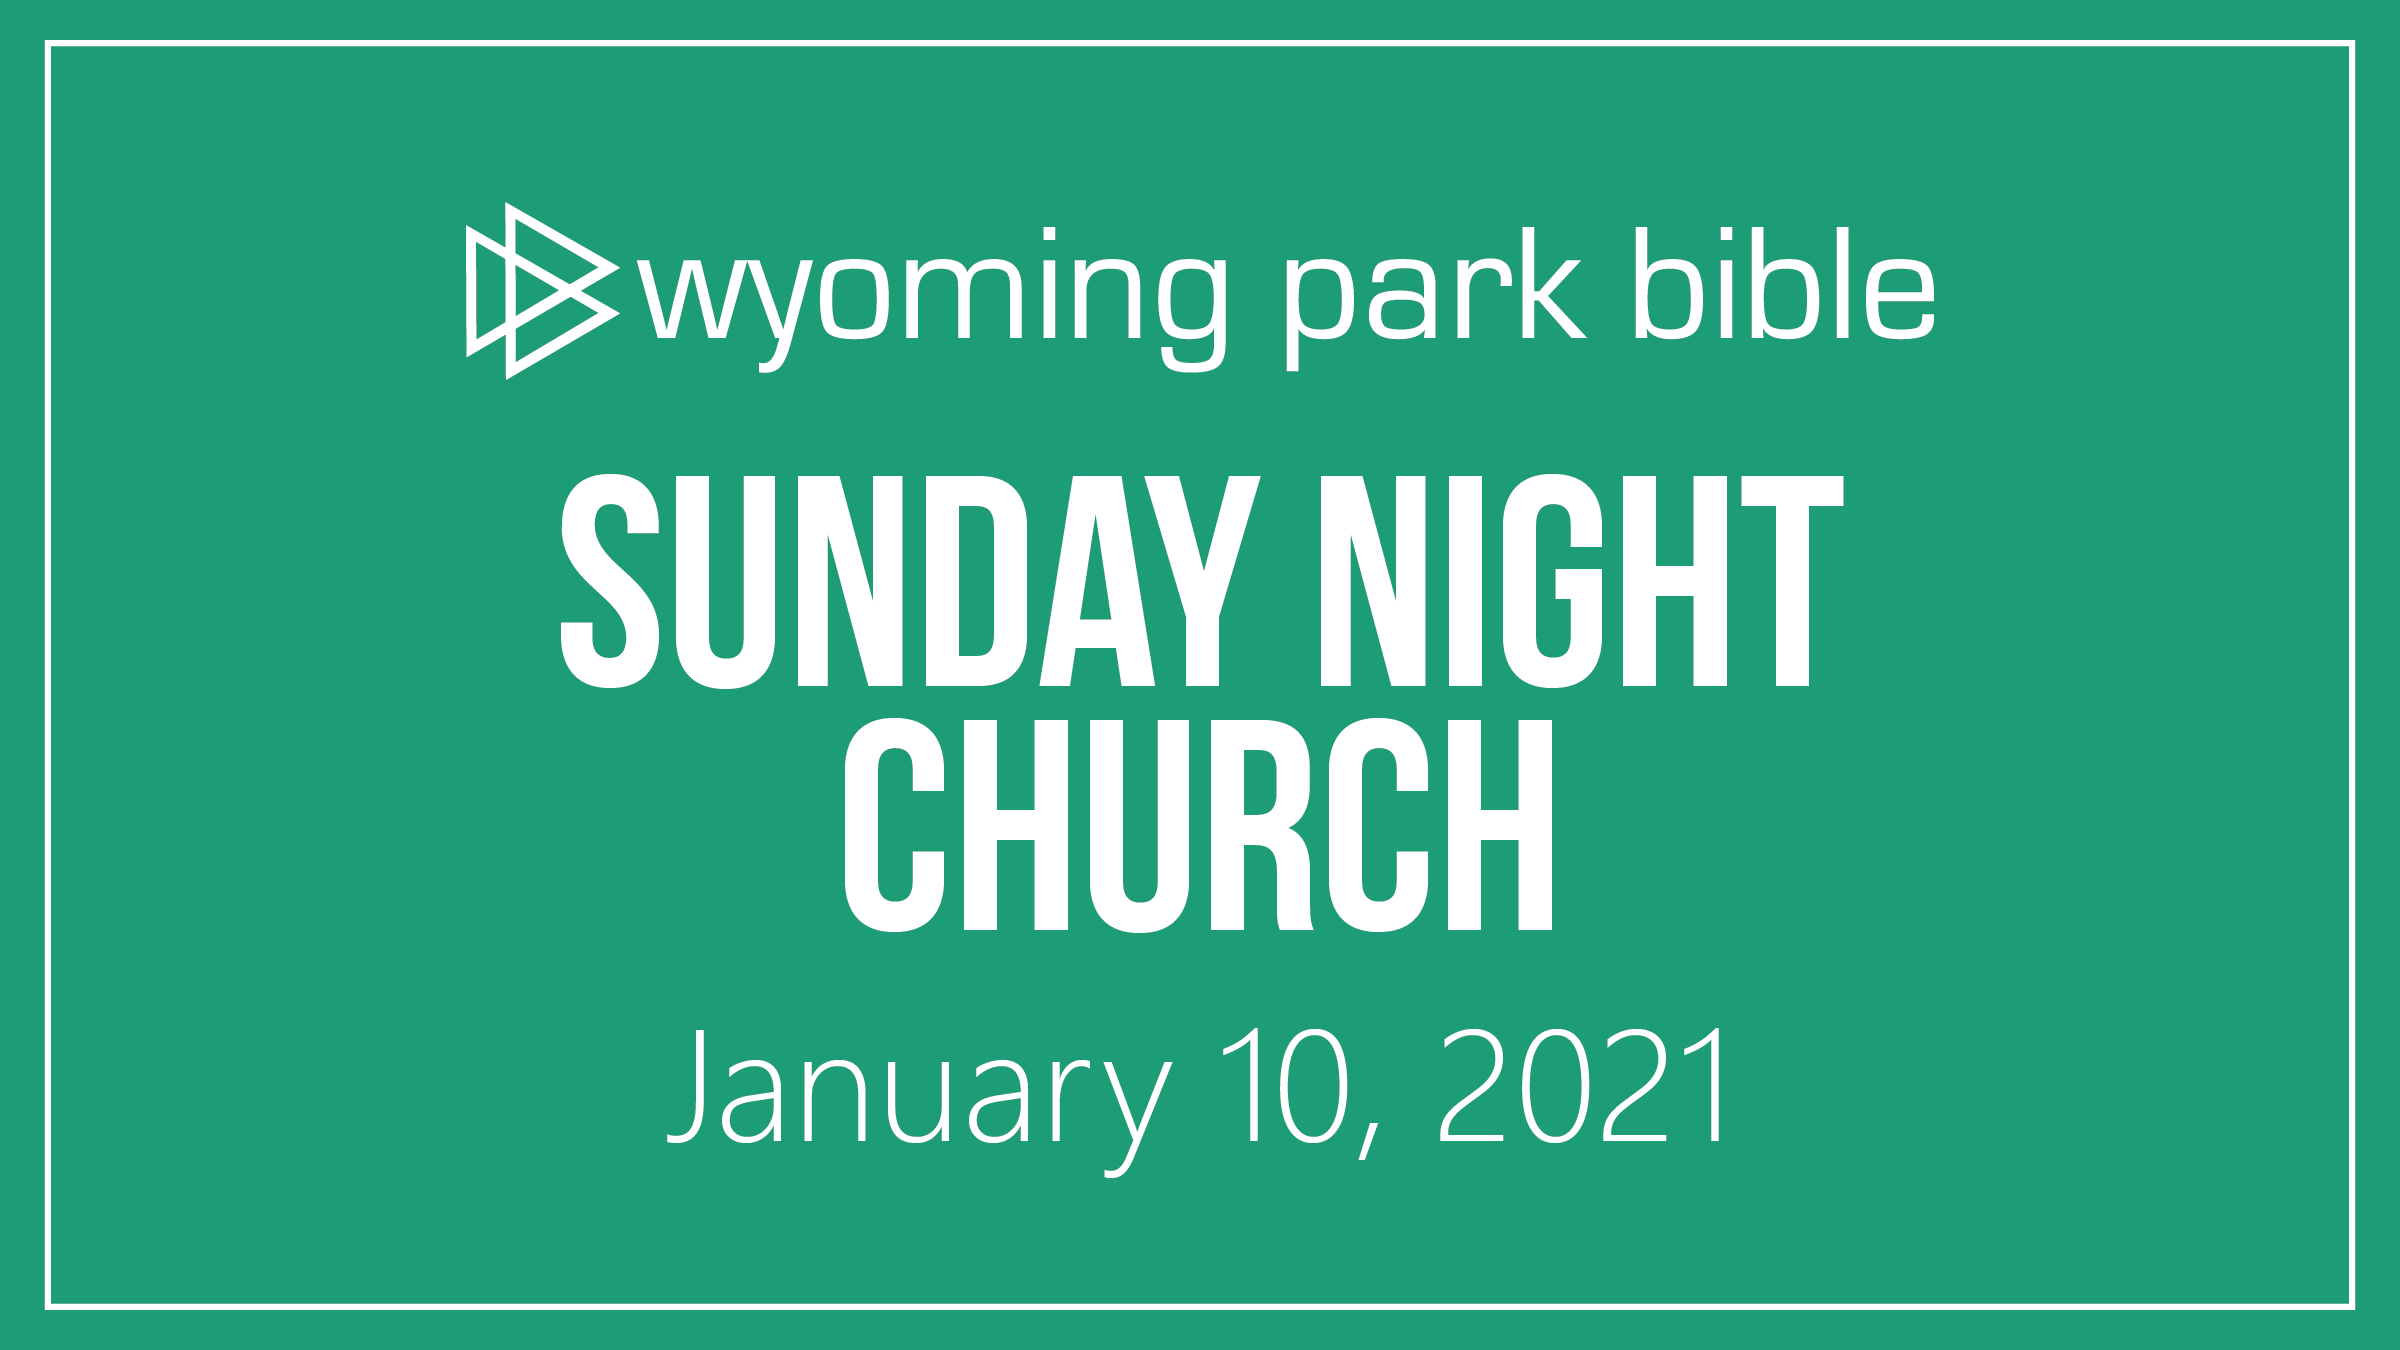 January 10, 2021 Sunday Night Church